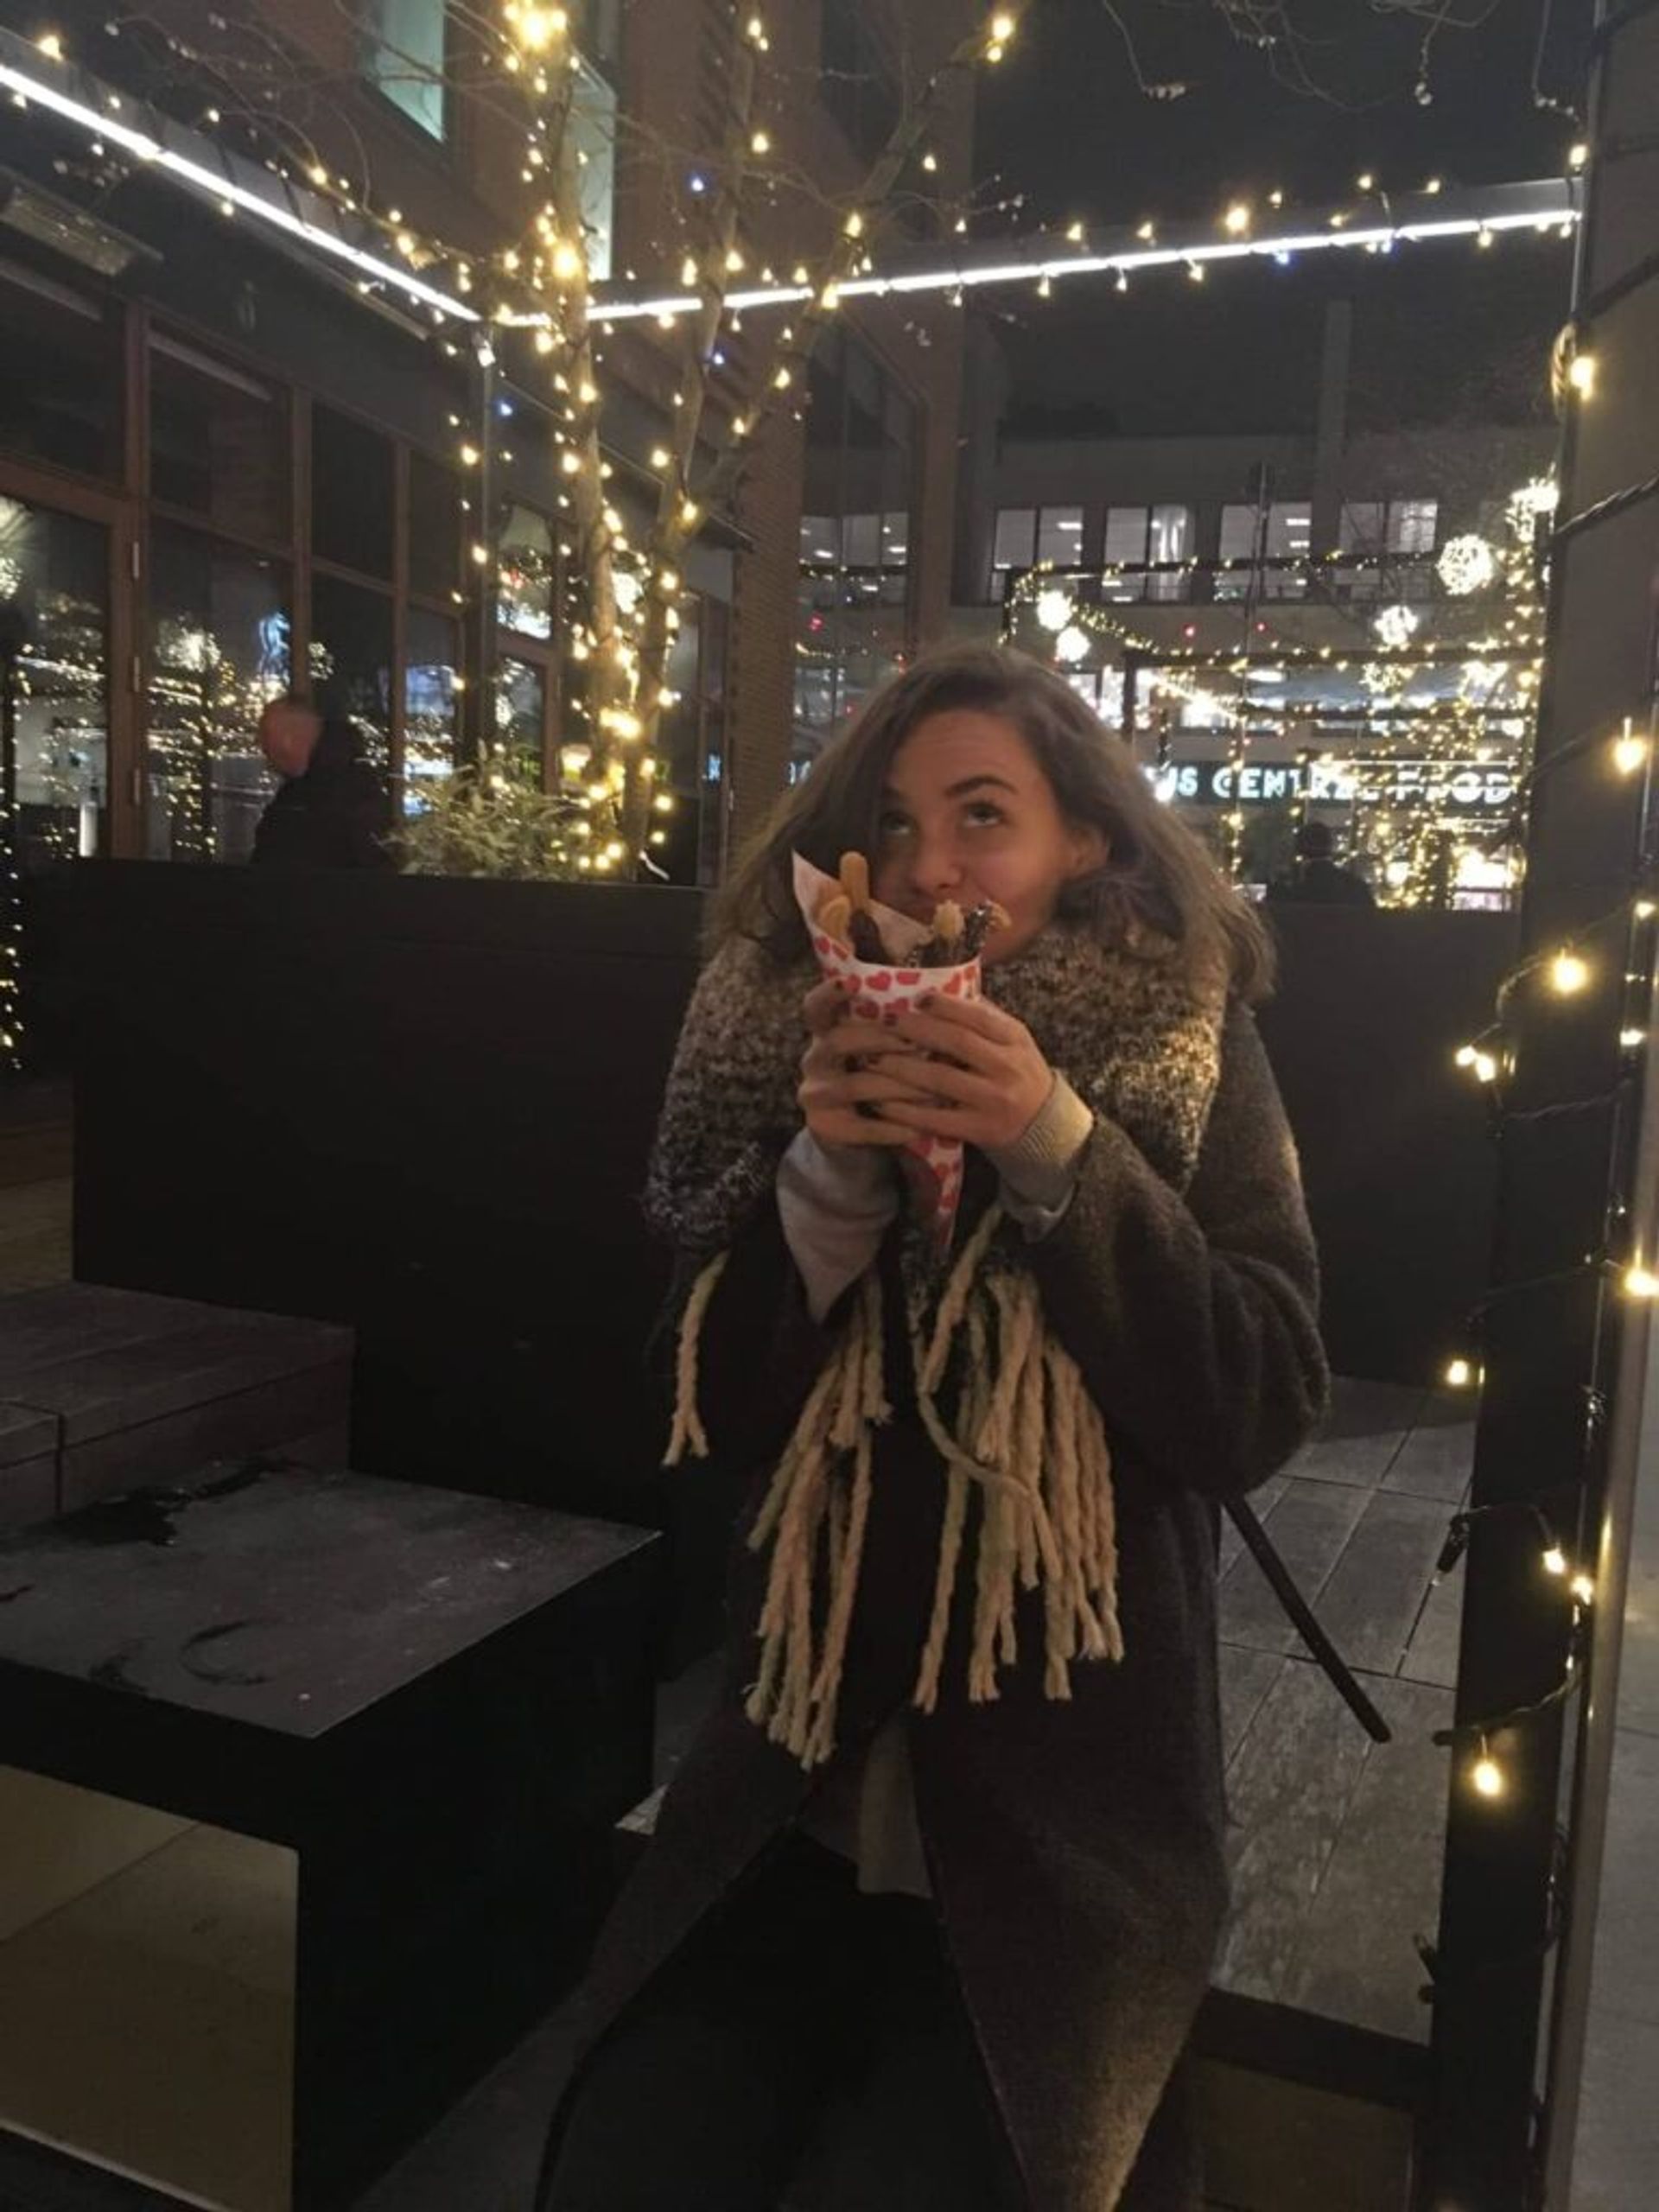 A girl eating churros in the dark. 